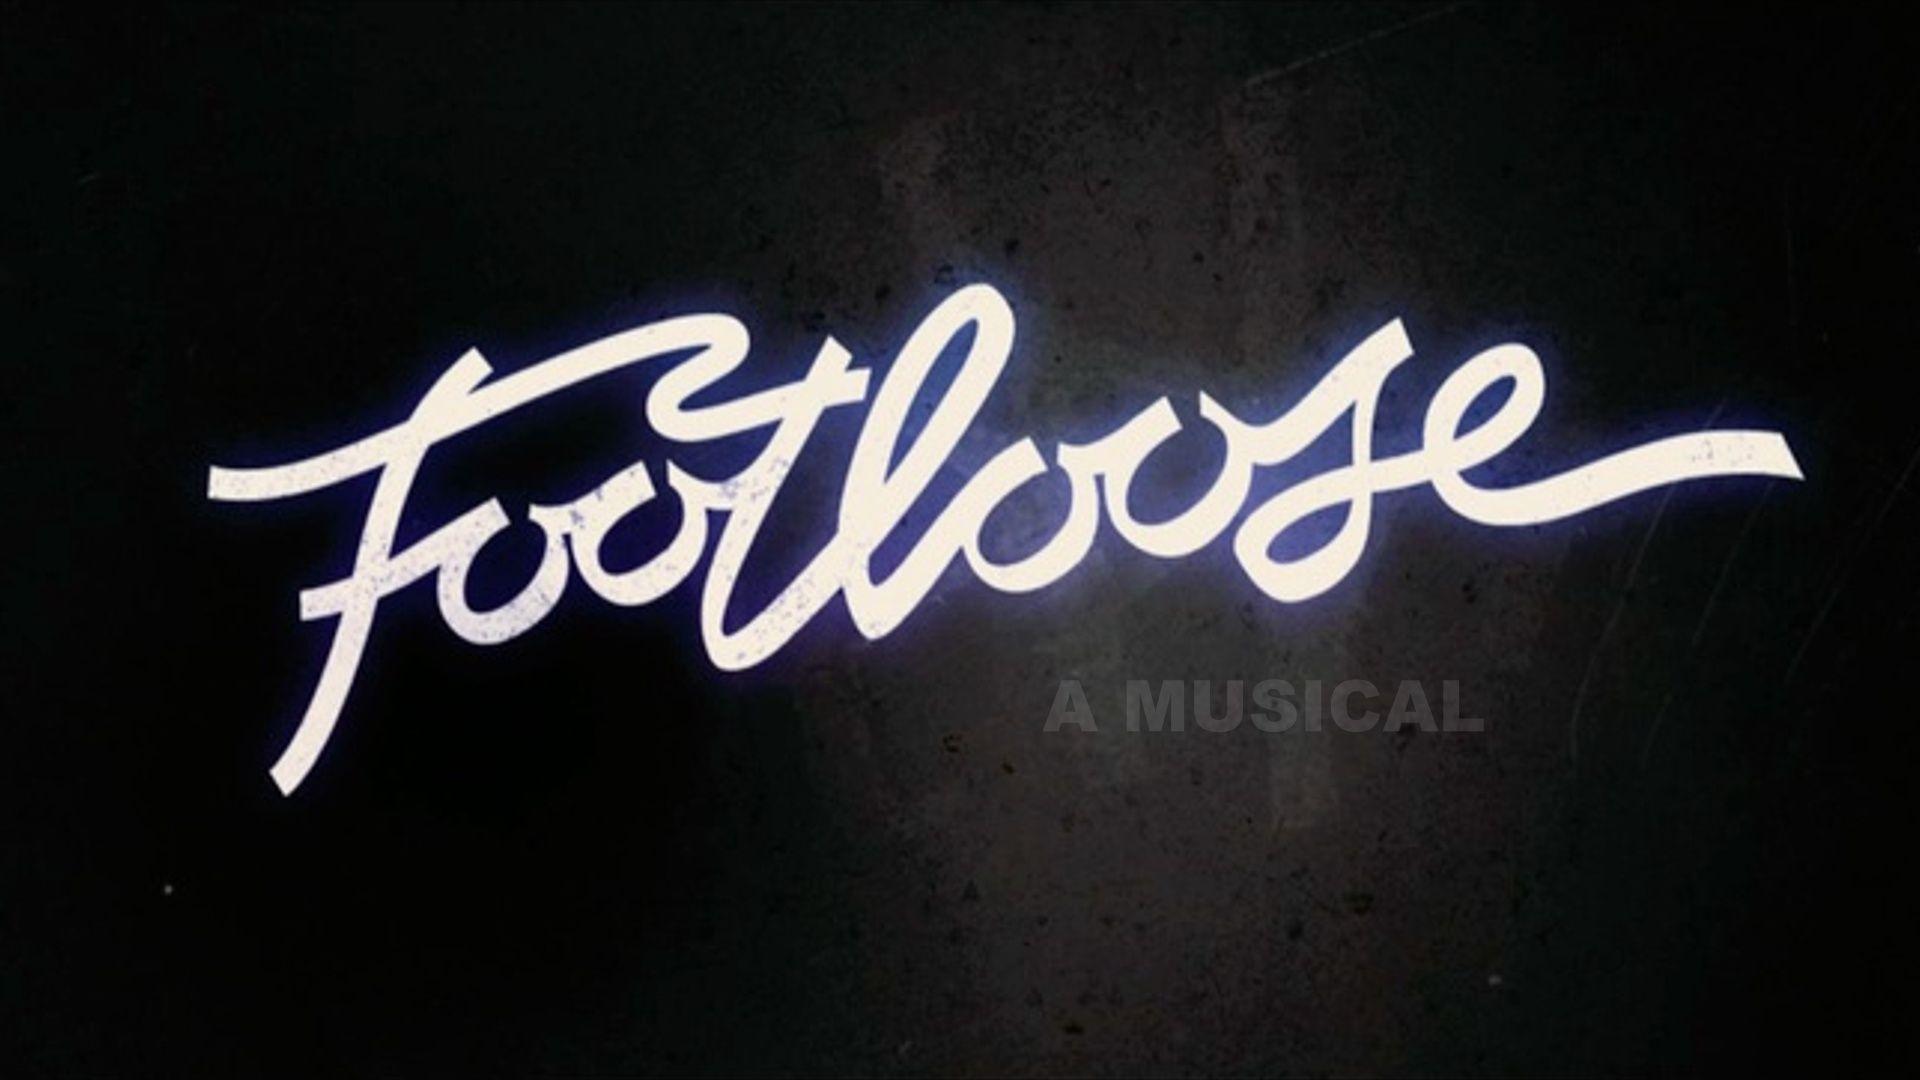 footloose logo vector